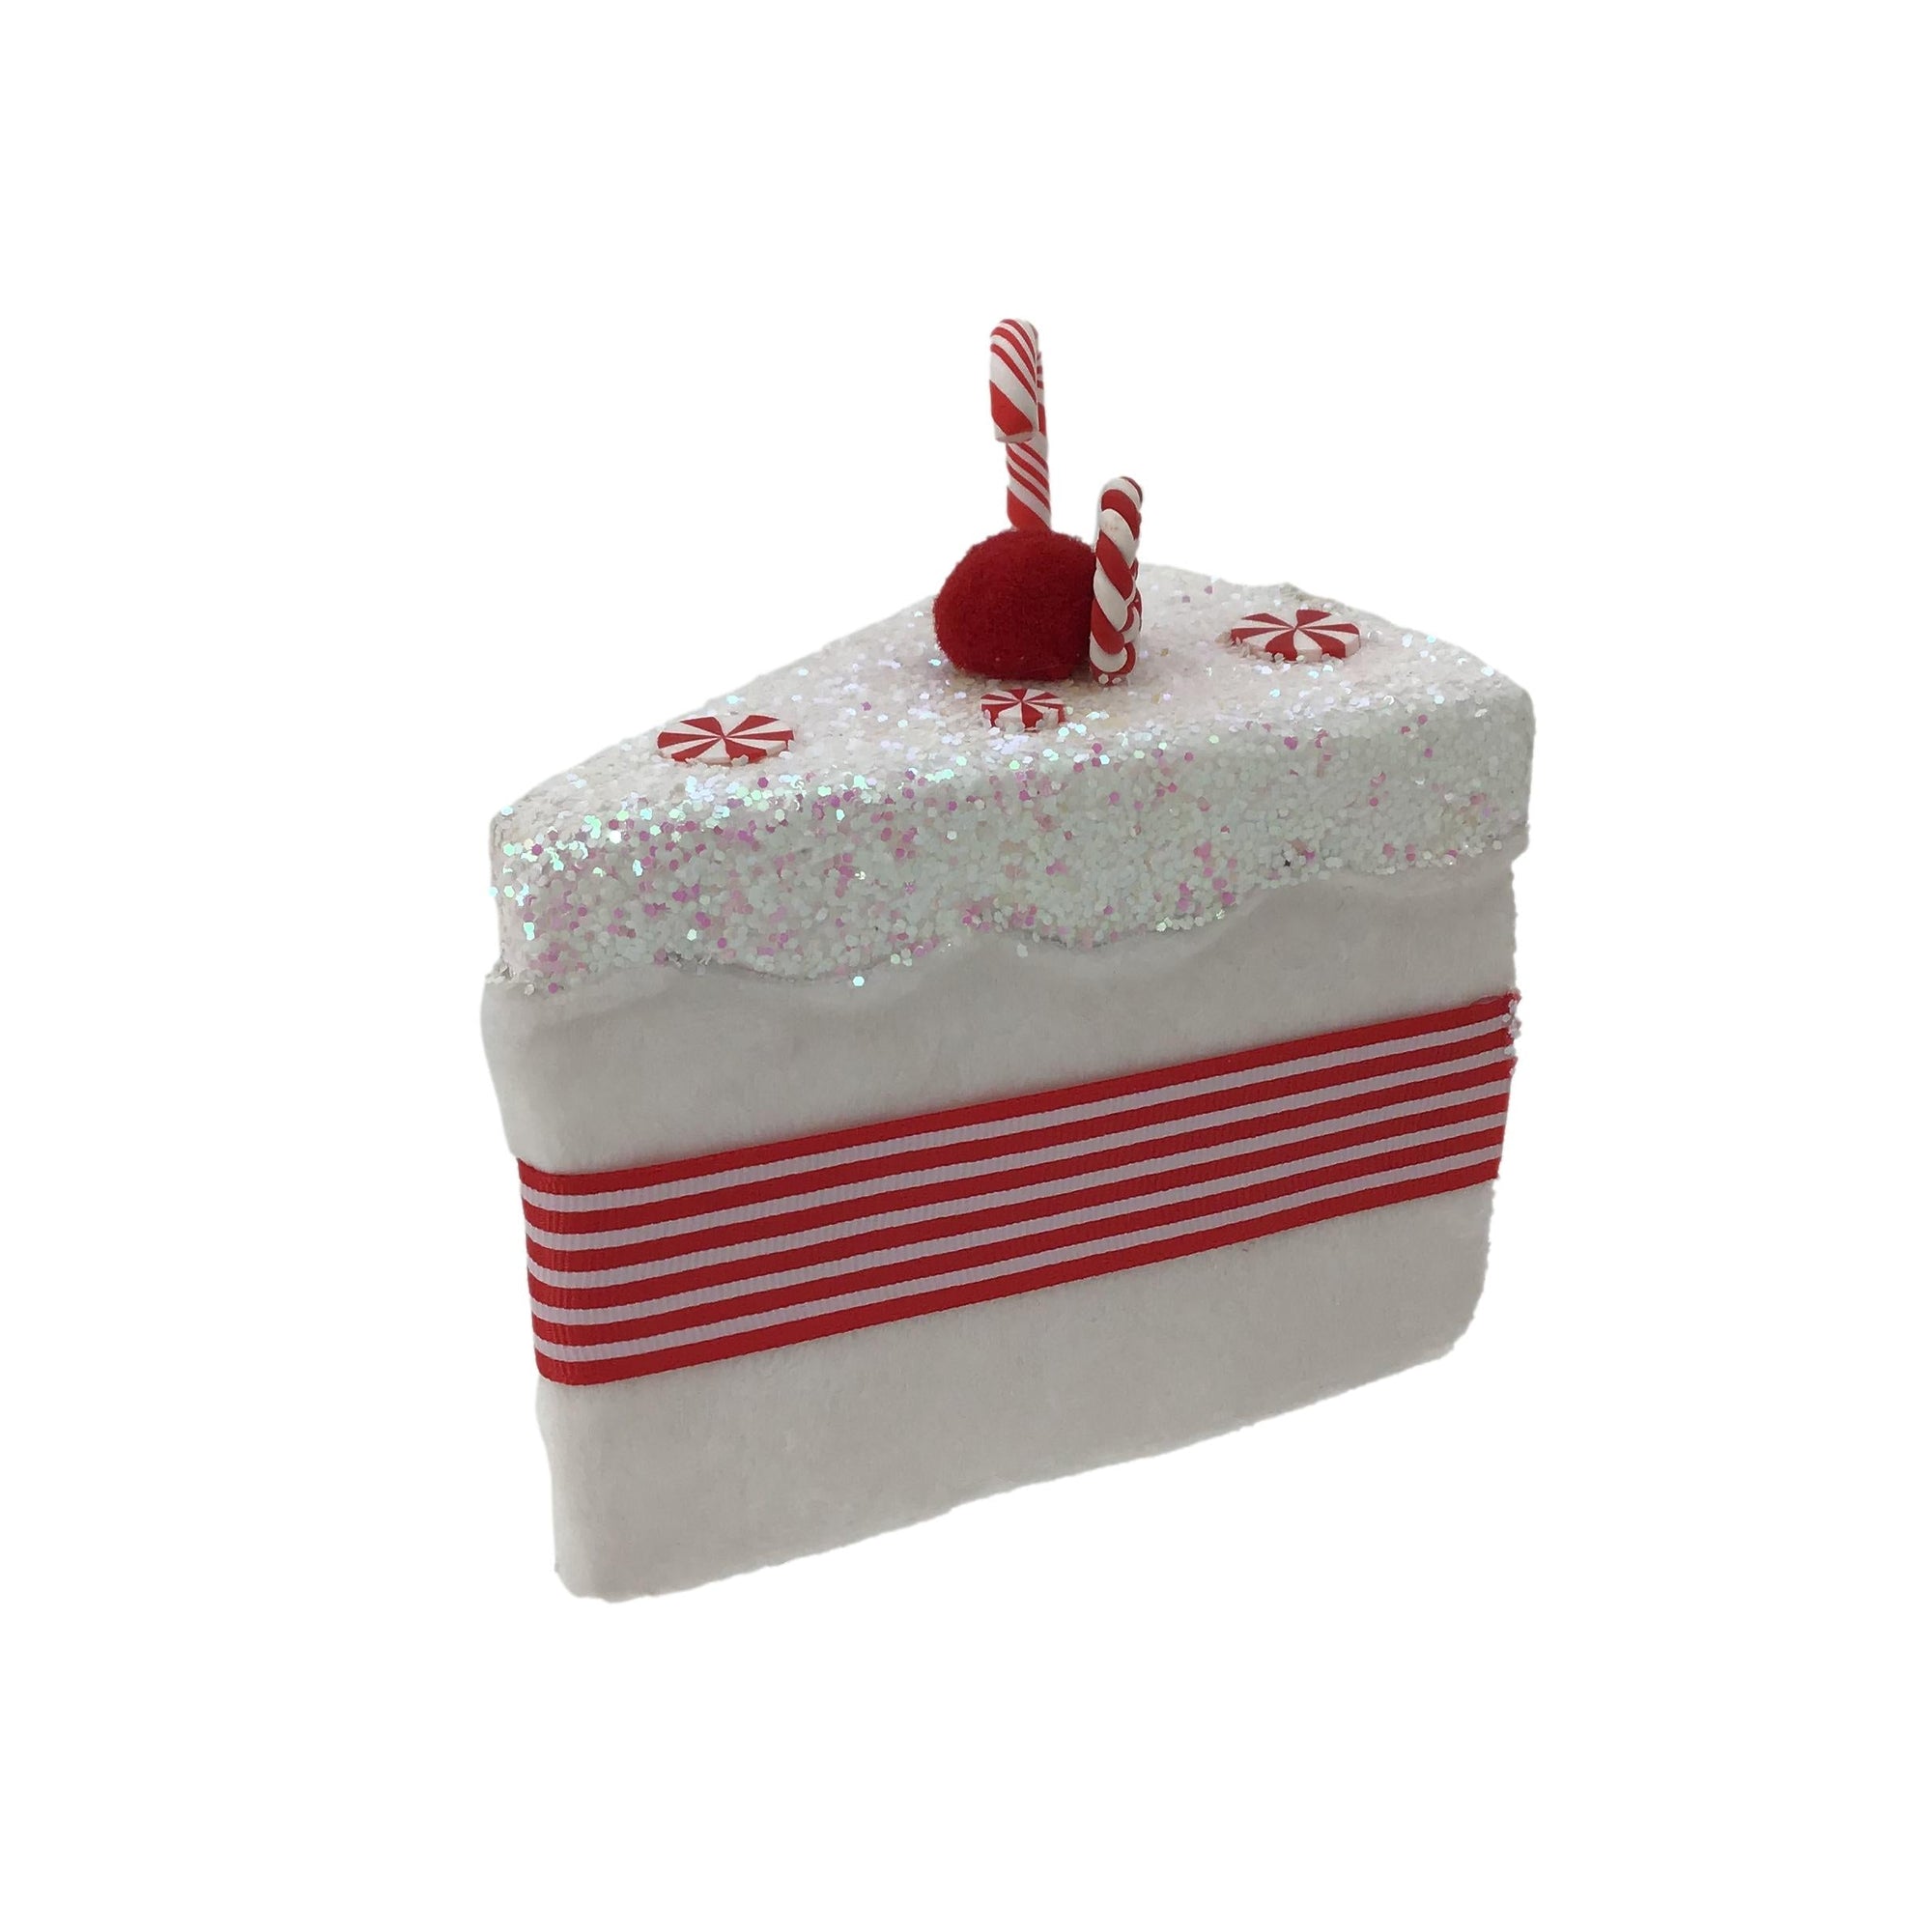 Red & White Cake Slice - My Christmas